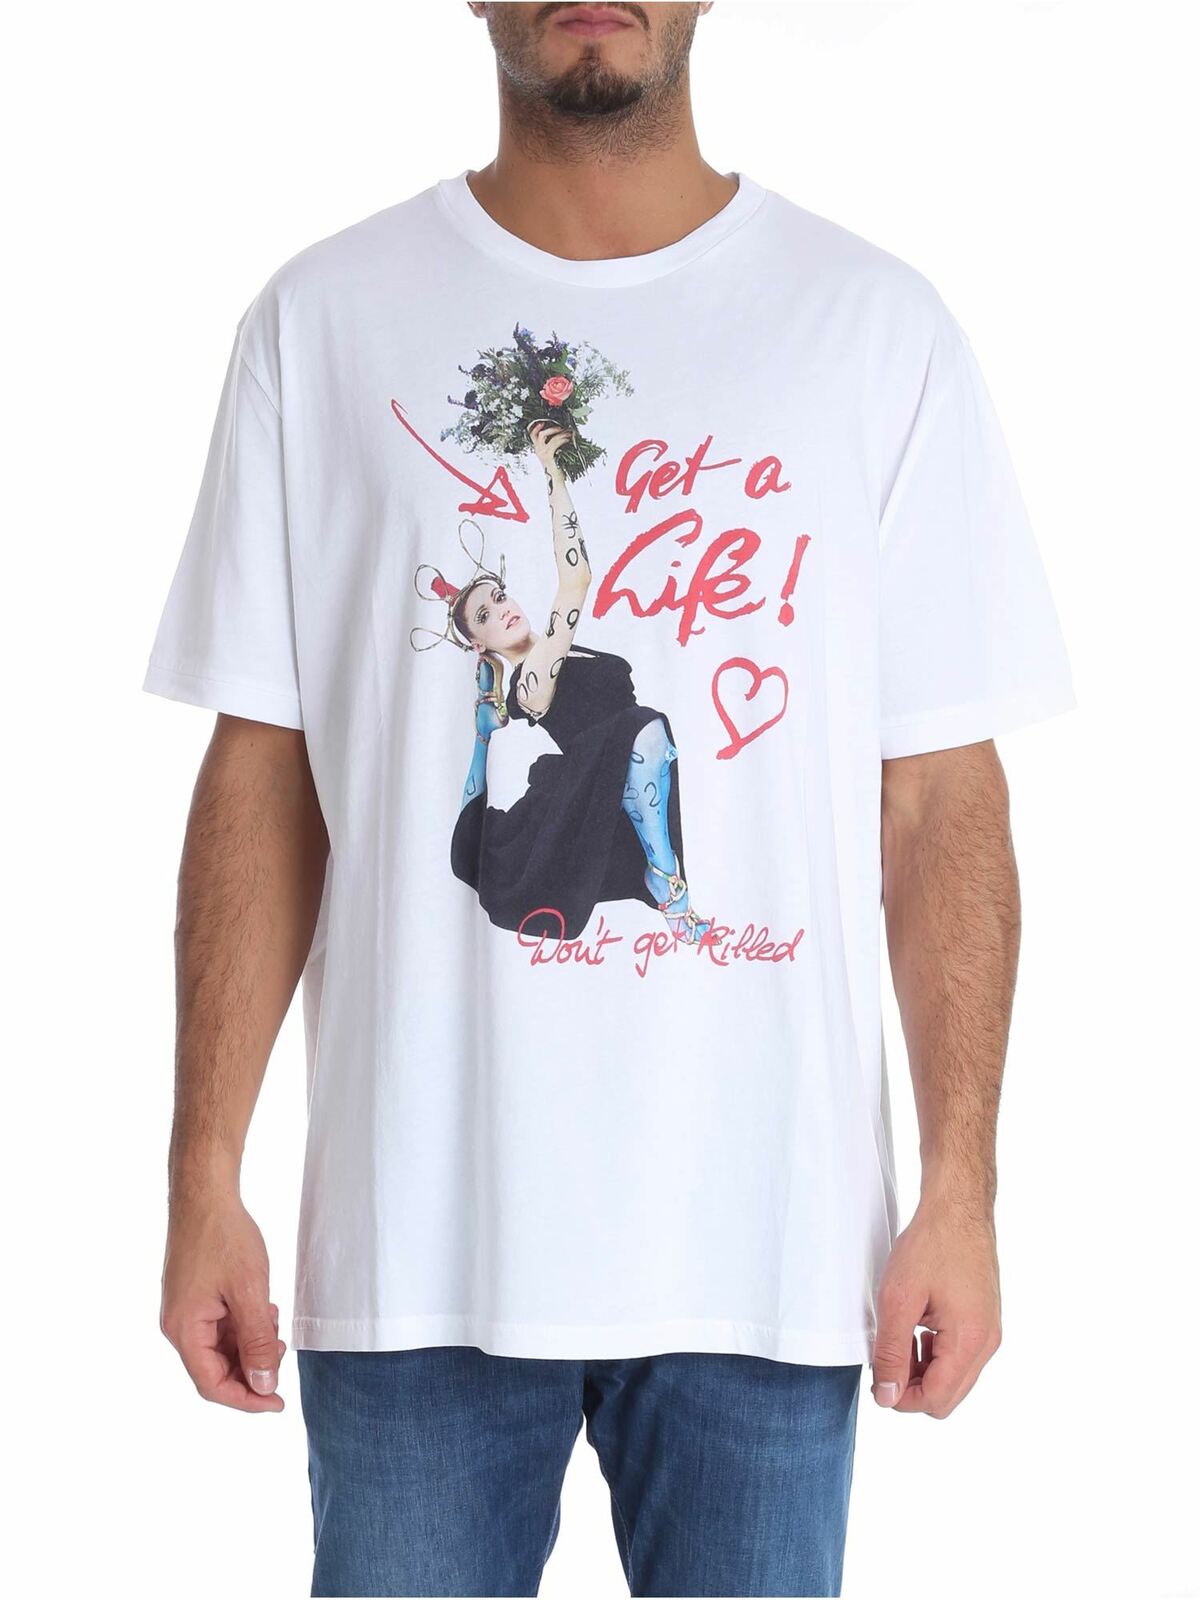 Tシャツ Vivienne Westwood - Tシャツ - 白 - S25GC0399S22634100